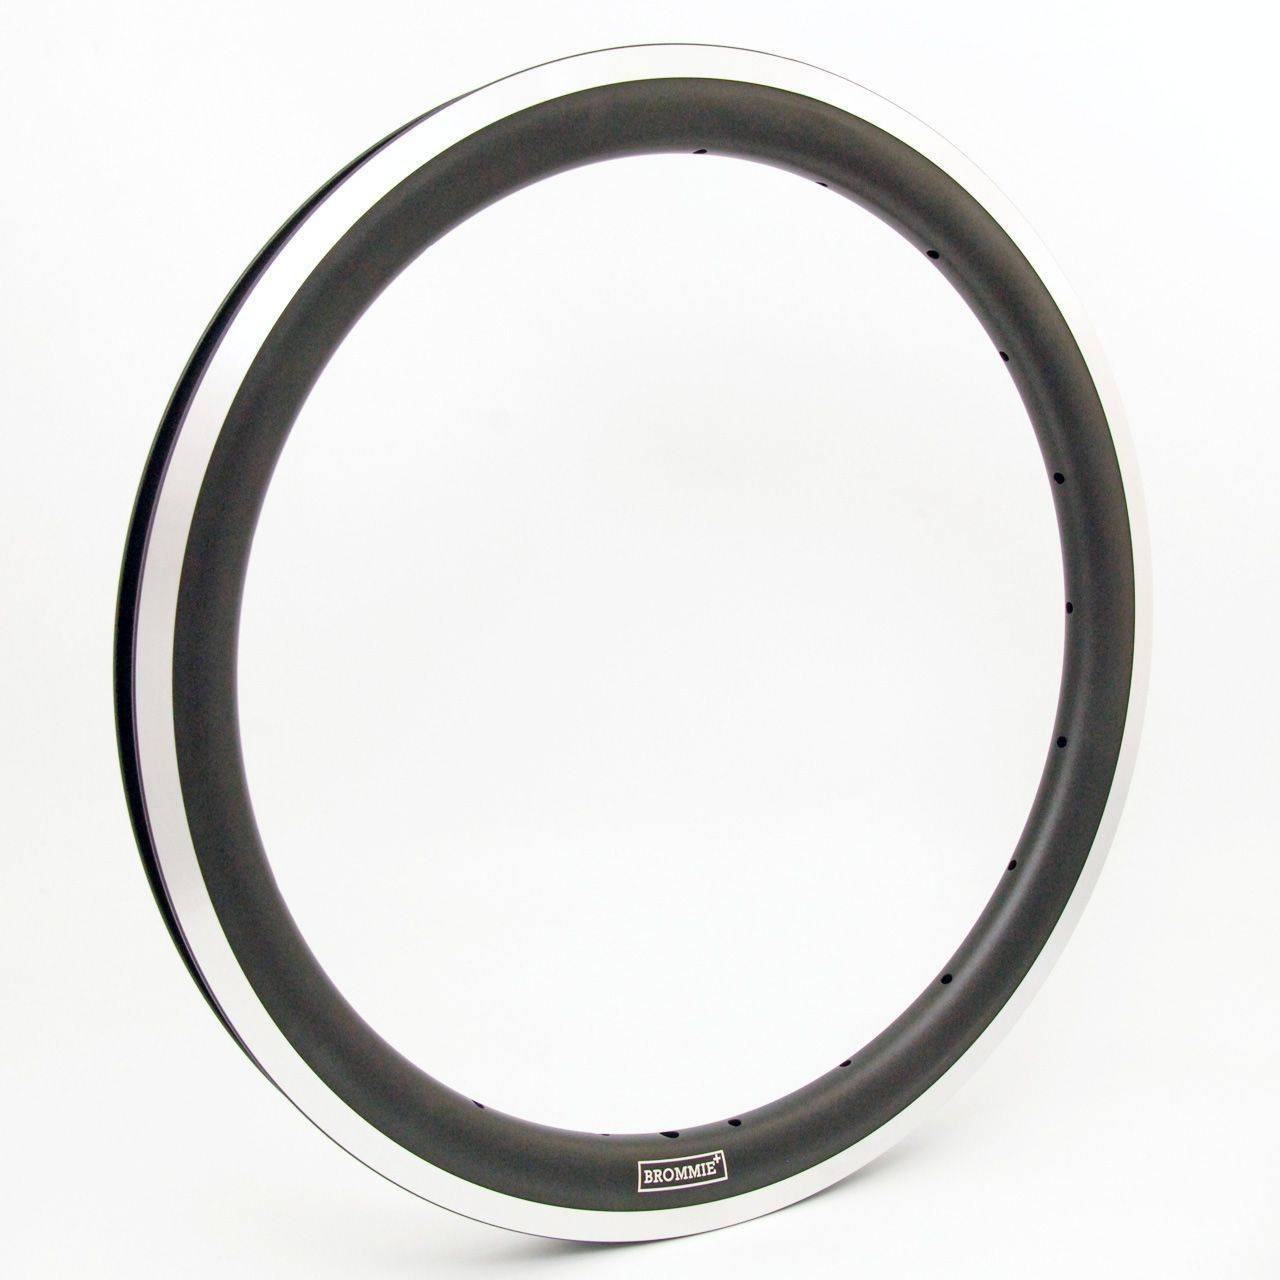 BrommiePlus R010 Welded Double Wall Rim - Black / Silver